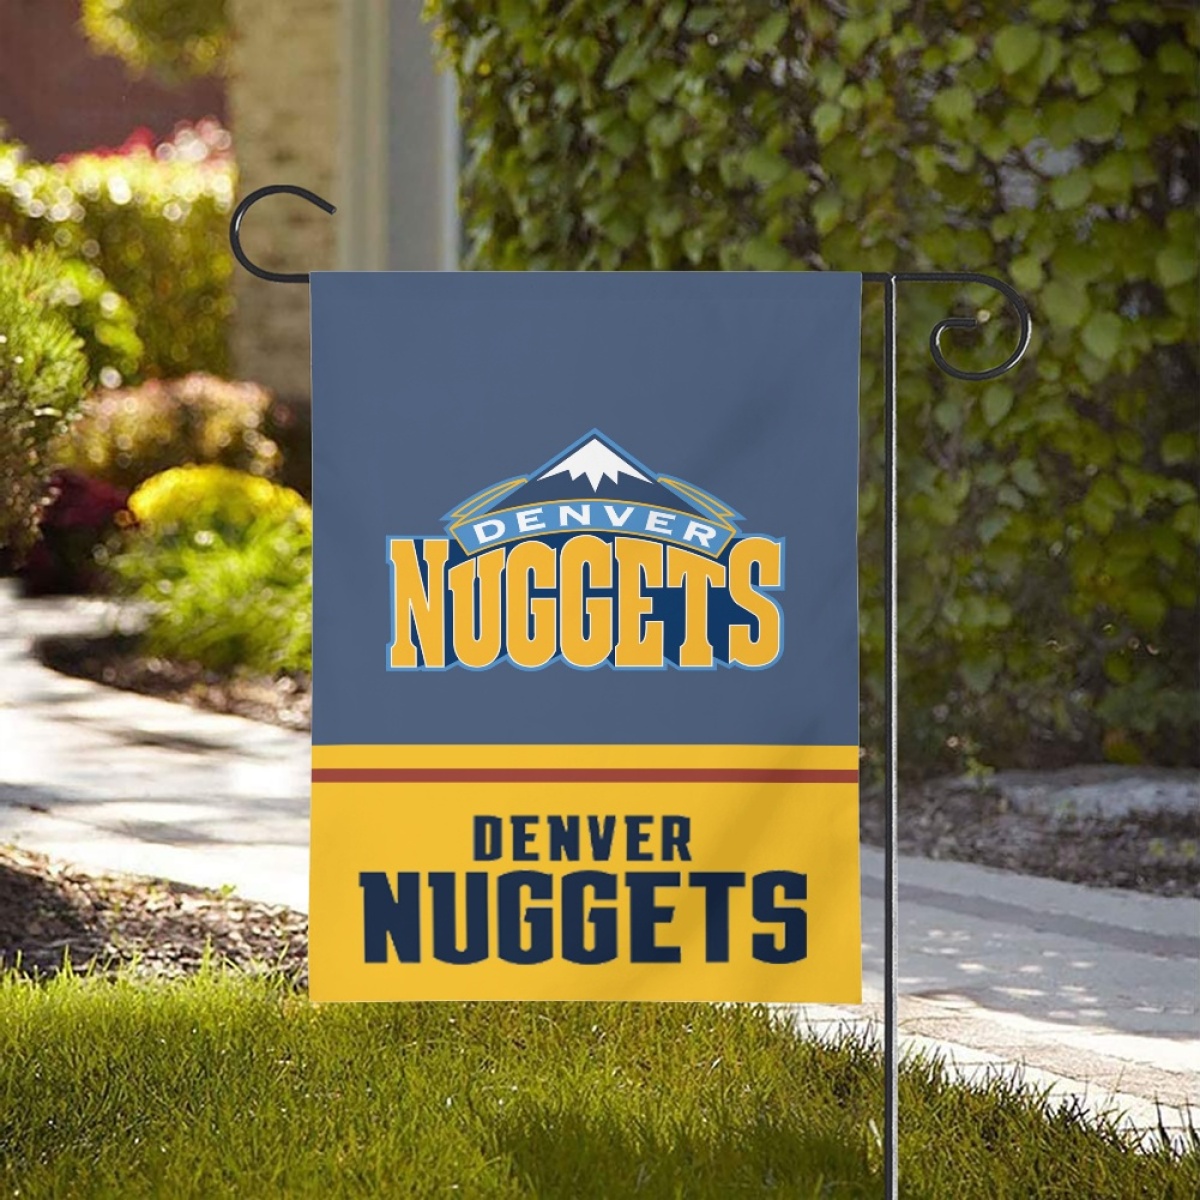 Denver Nuggets Double-Sided Garden Flag 001 (Pls check description for details)